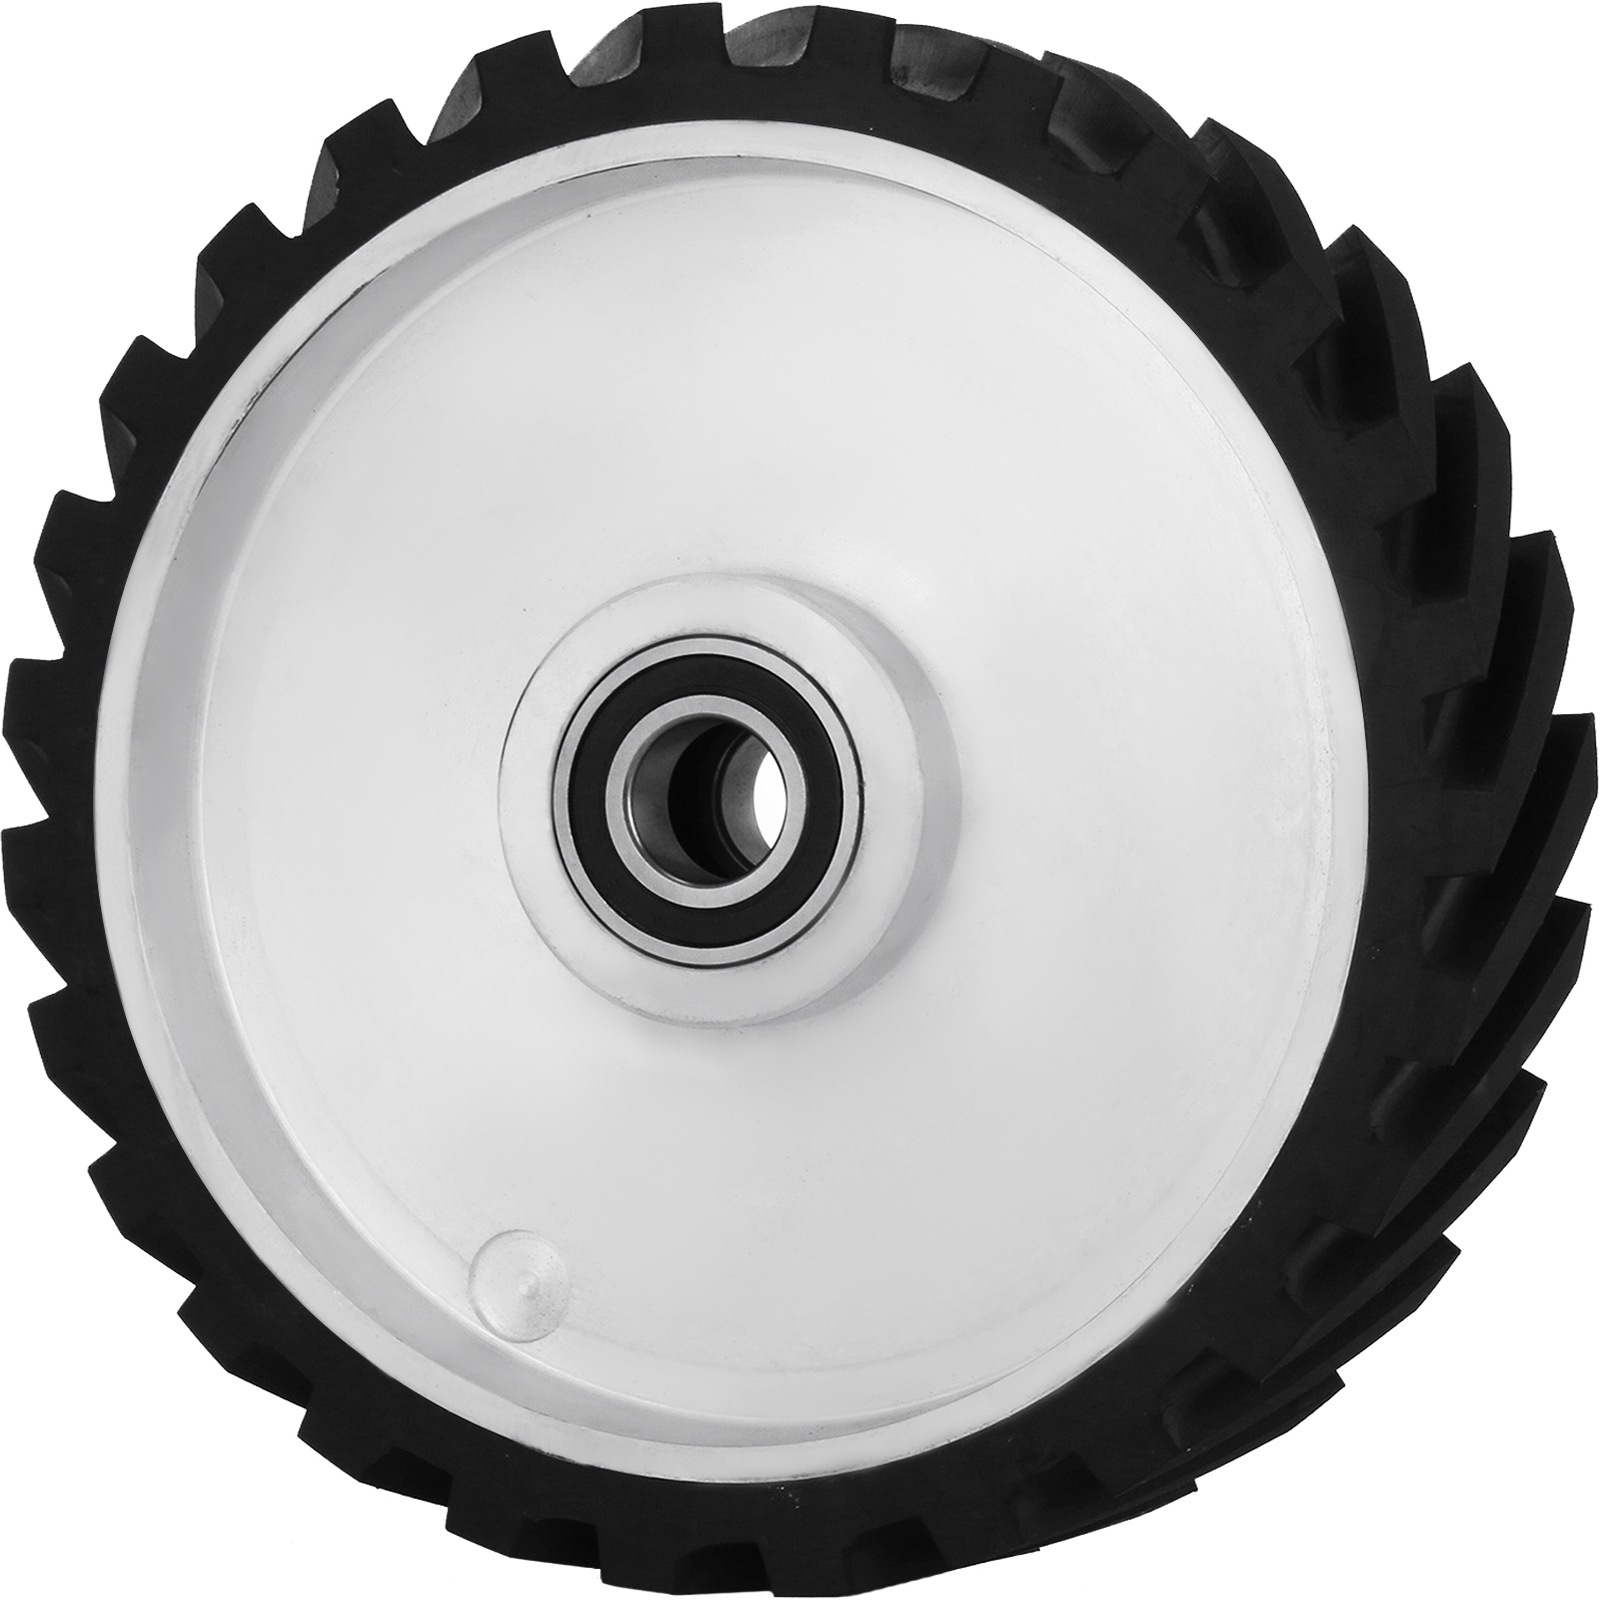 12" Grinder Sander Serrated Contact Rubber Wheel Unopened Dynamically Balanced от Vevor Many GEOs